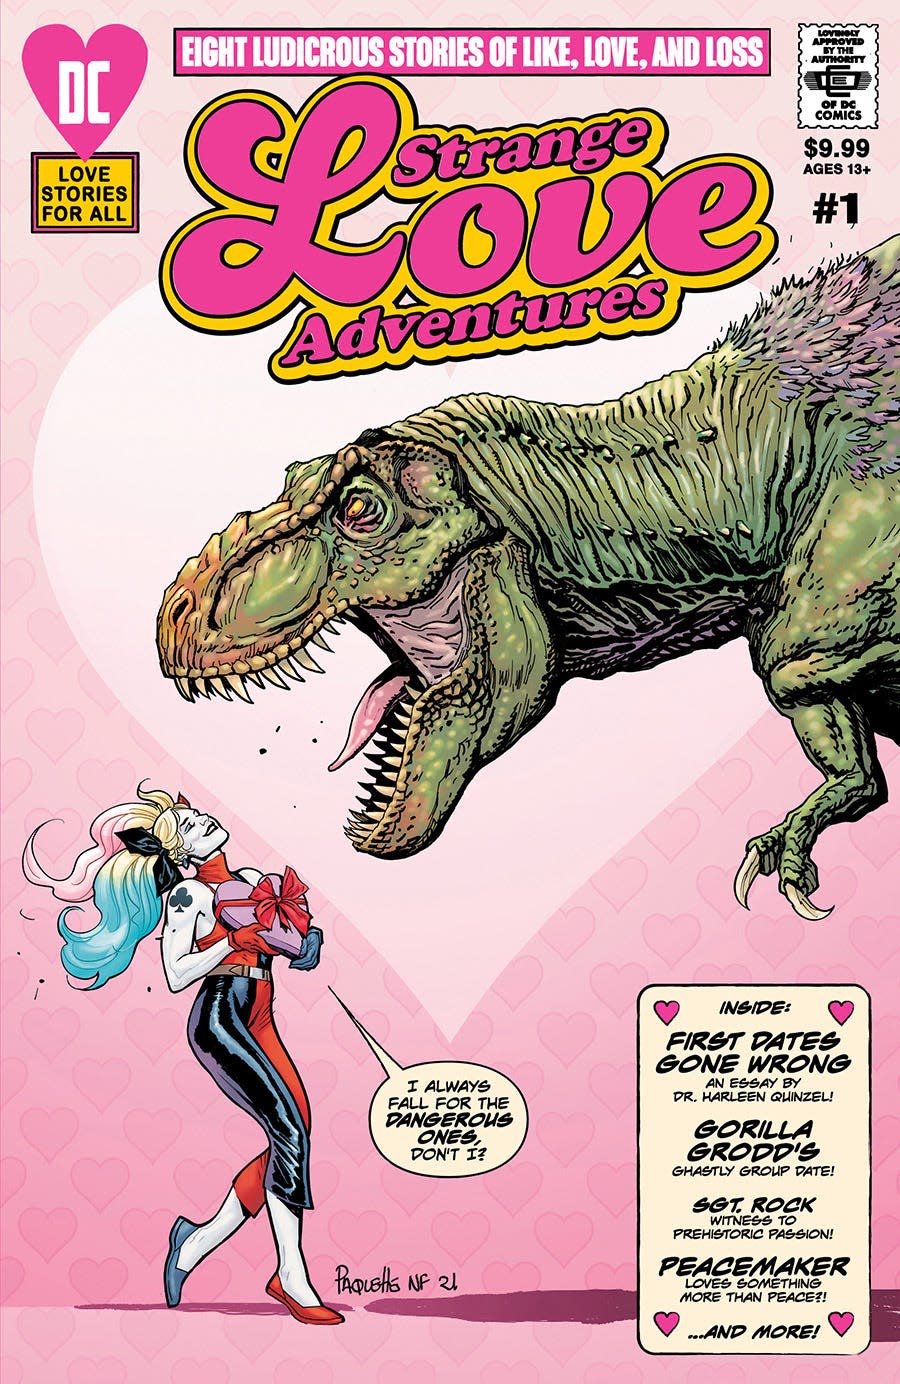 Harley Quinn is featured in DC Comics' "Strange Love Adventures" #1.